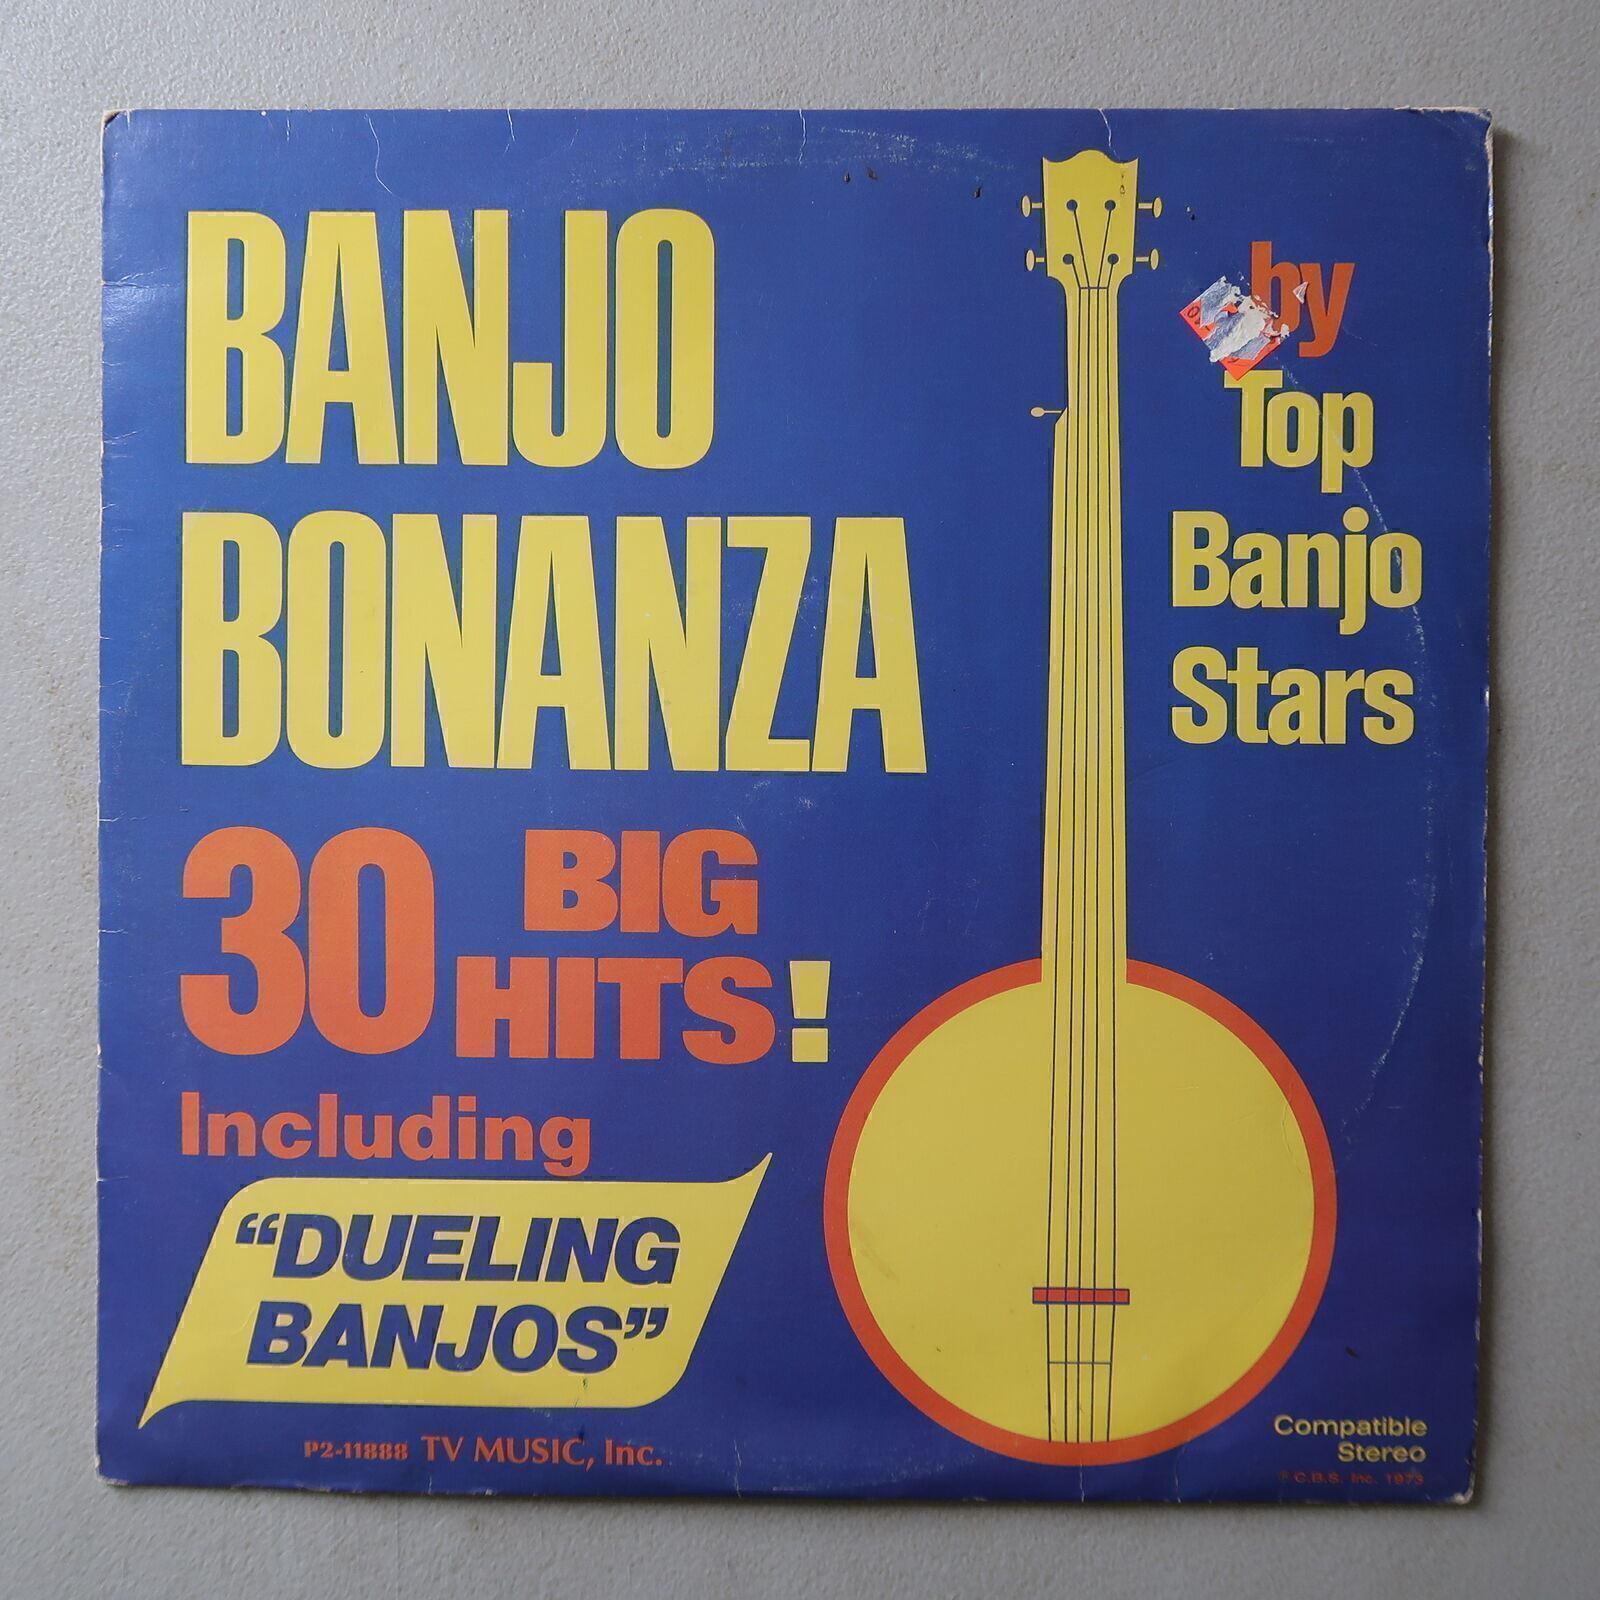 TOP BANJO STARS BANJO BONANZA 30 BIG HITS VINYL LP COLUMBIA VG 81